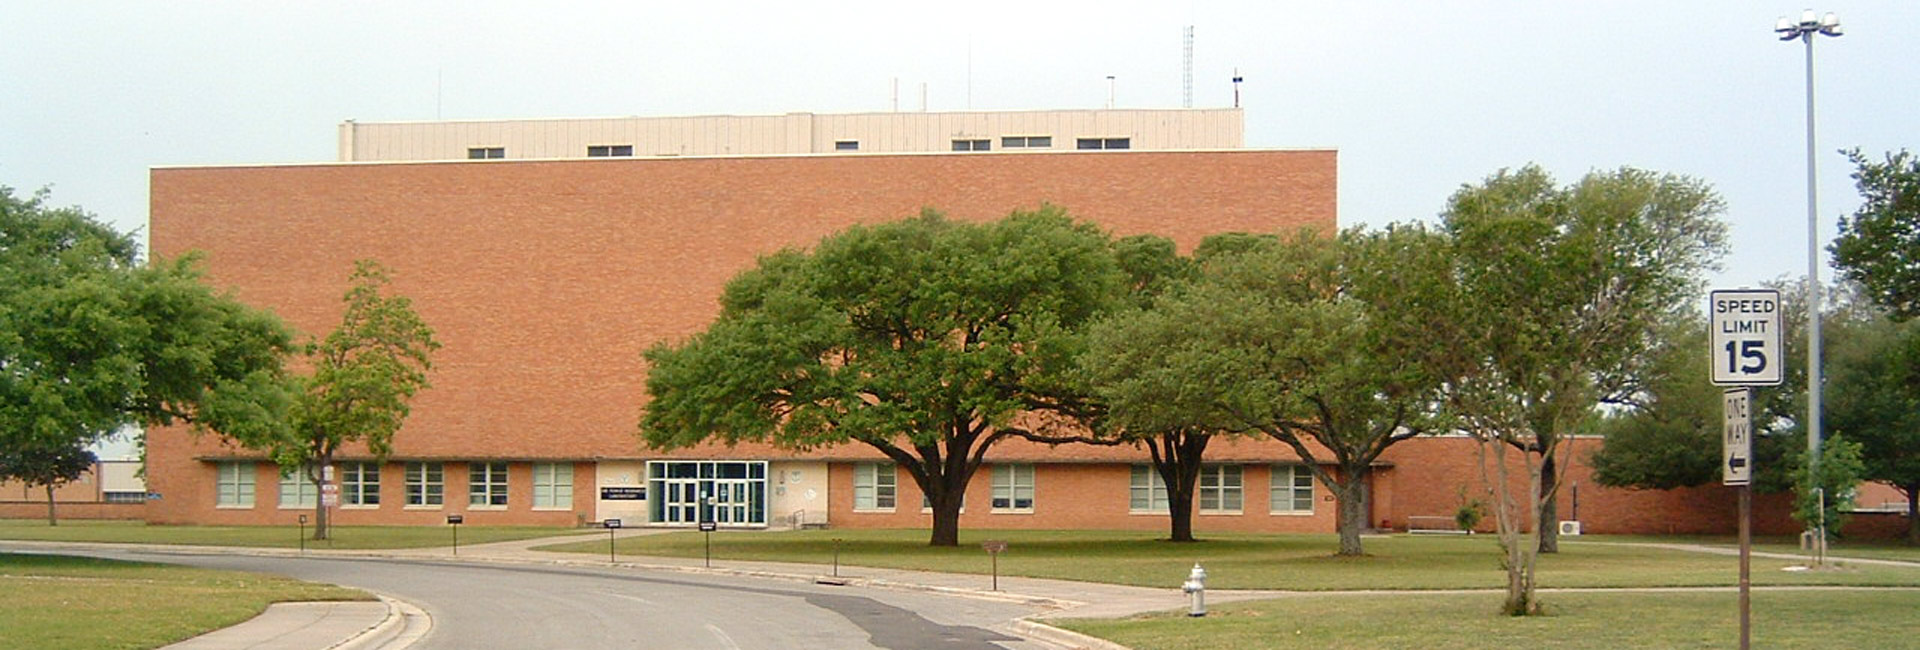 Brooks City Base – Bioterrorism Laboratory